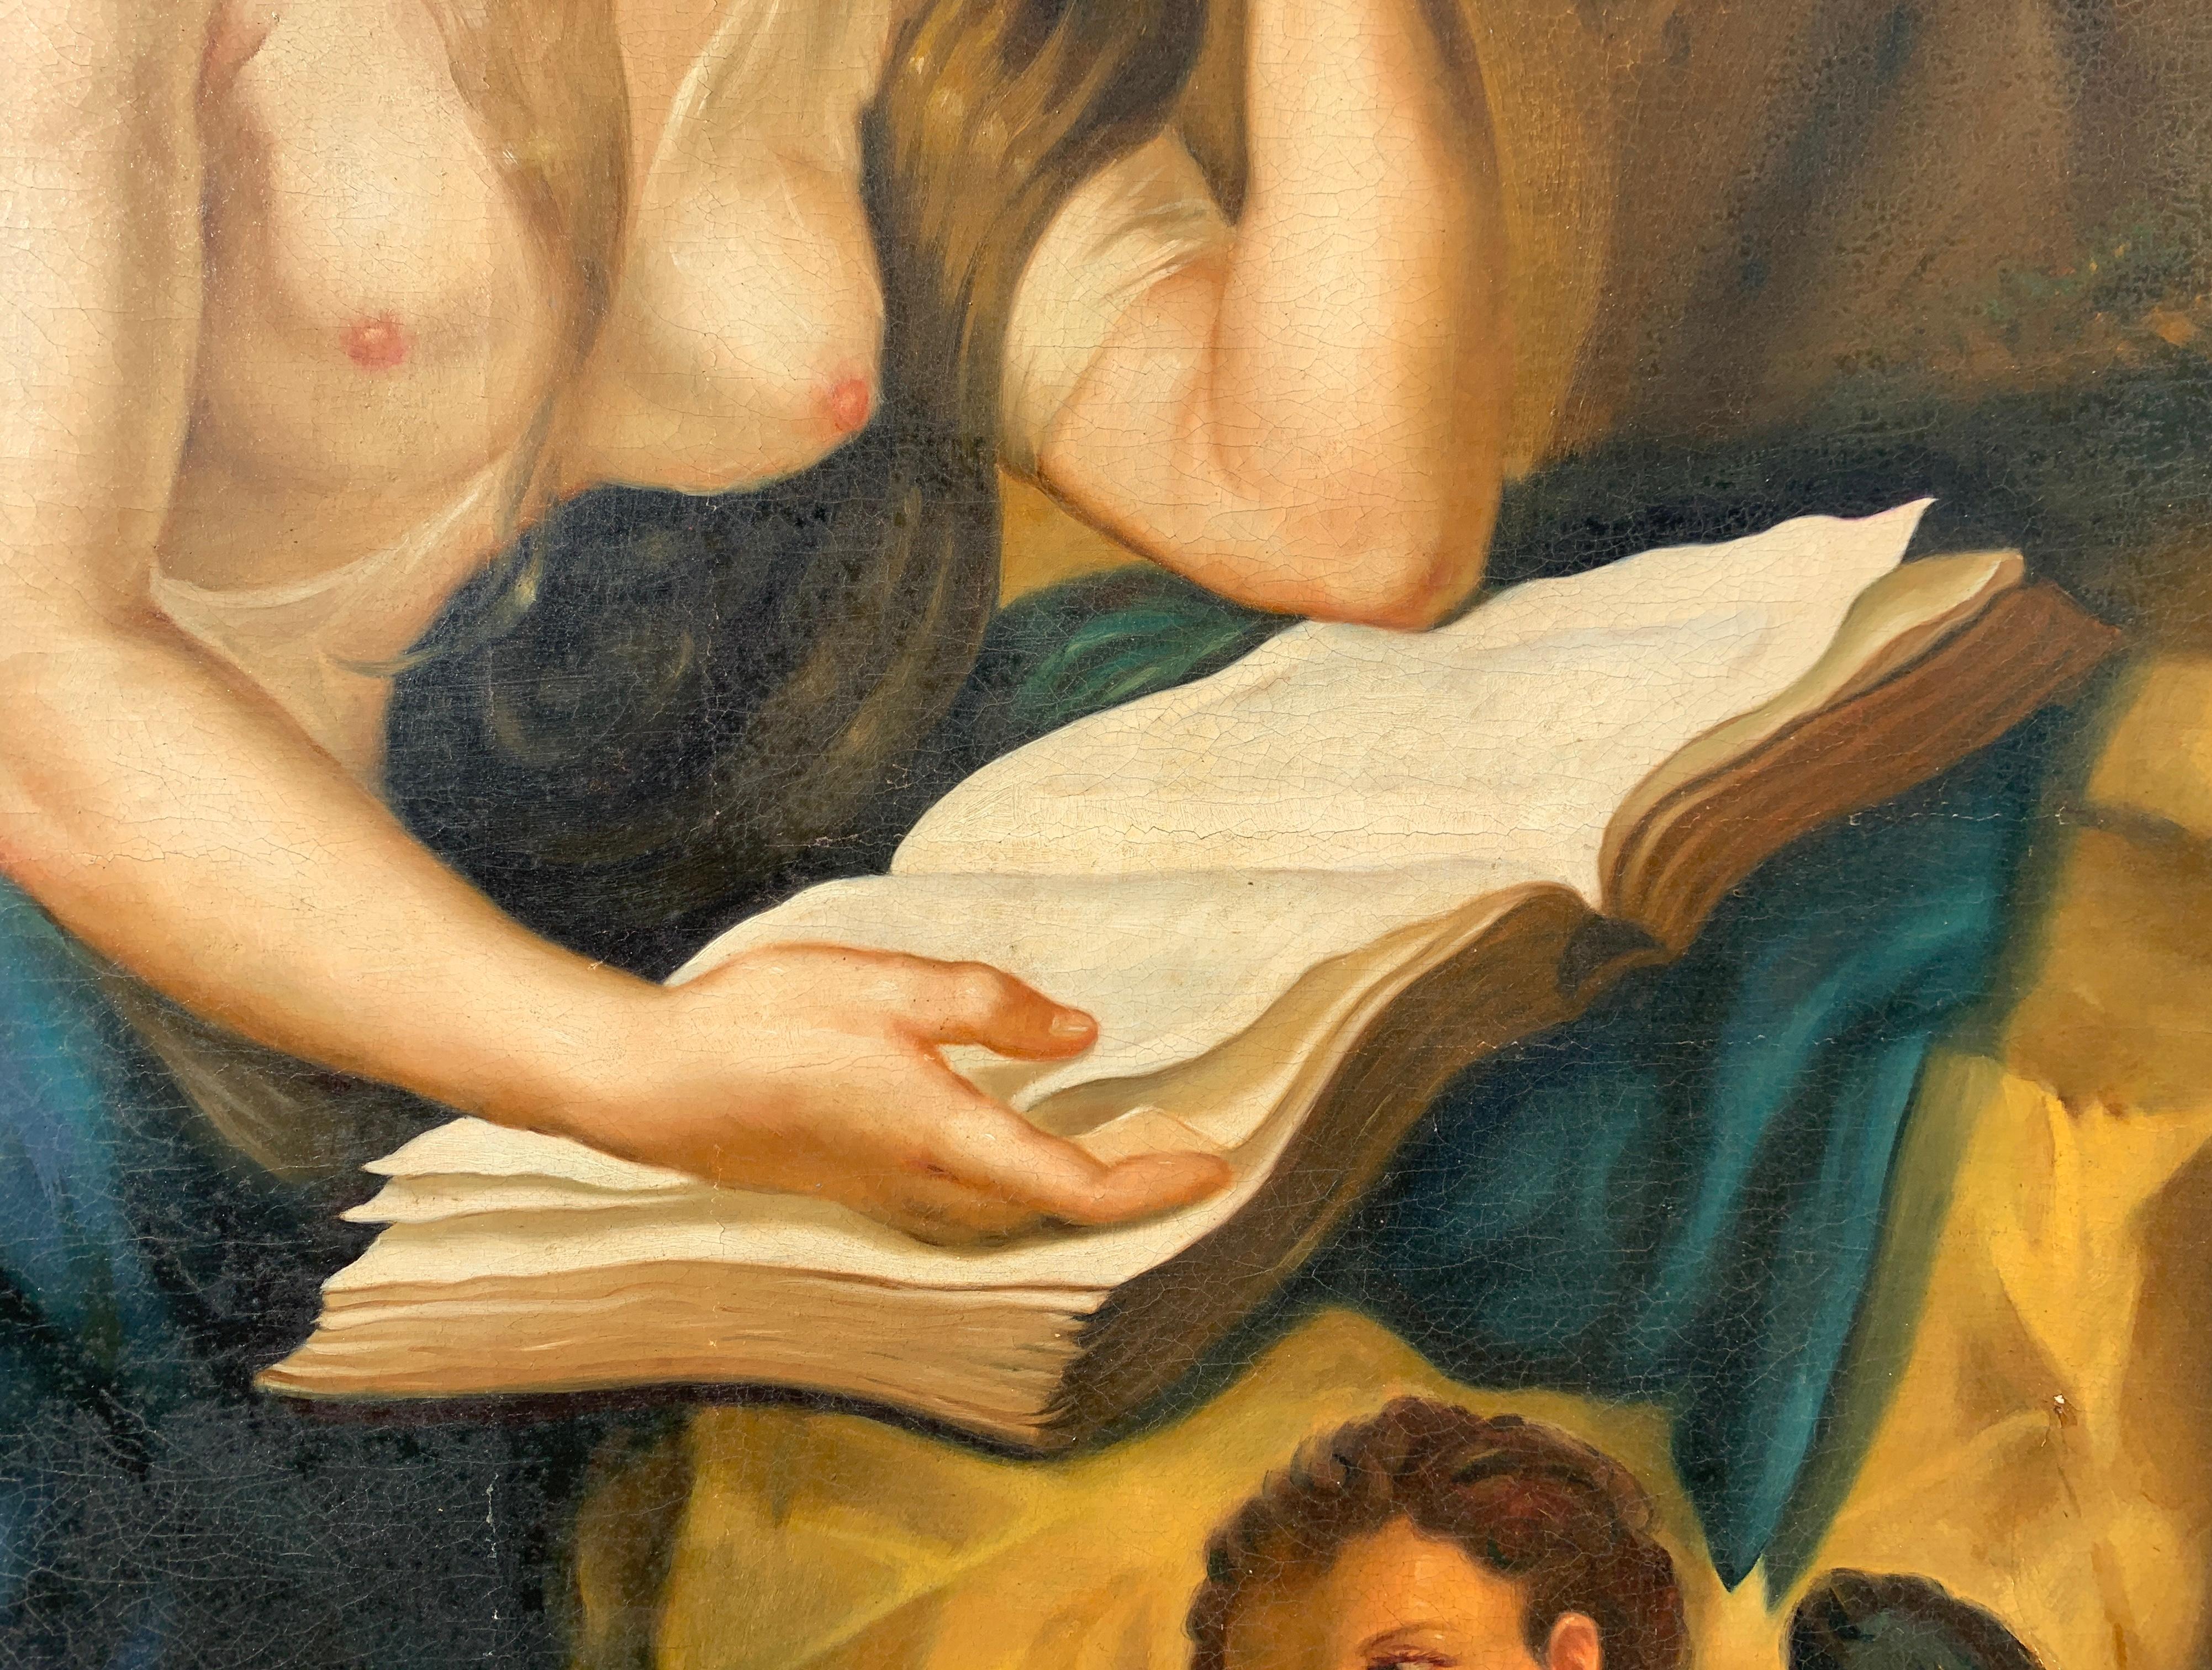 Barocker Maler (Italienische Schule) - Figurenmalerei des 18. bis 19. Jahrhunderts im Angebot 2